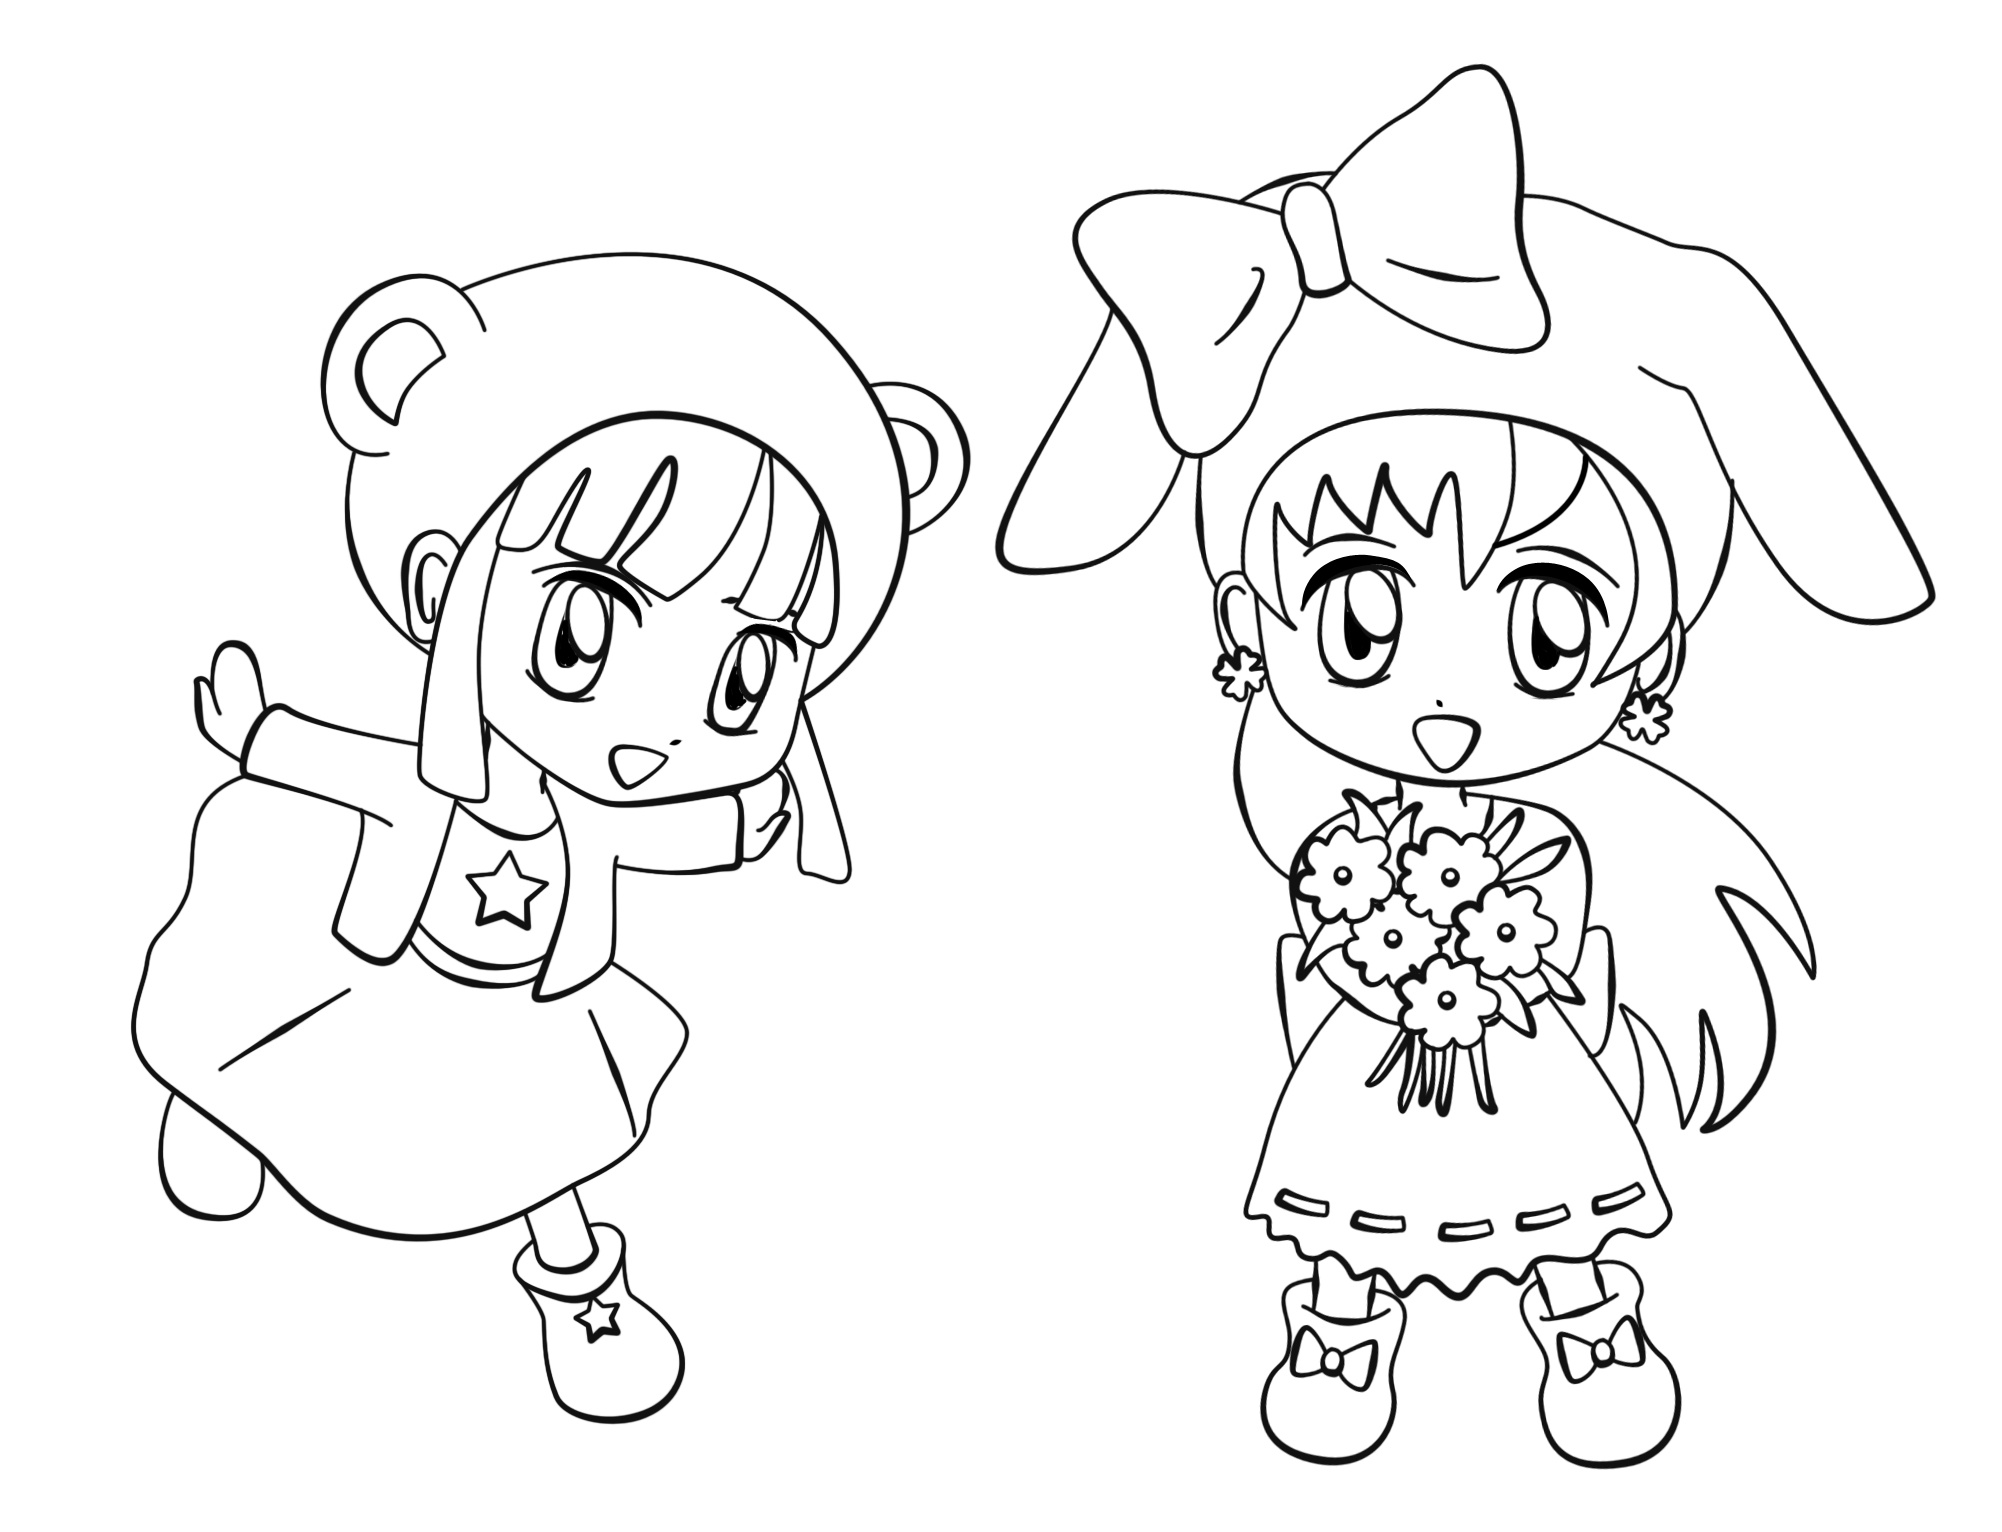 Coloriage Manga Élégant Images Chibi Girl Base Colouring Pages Sketch Coloring Page